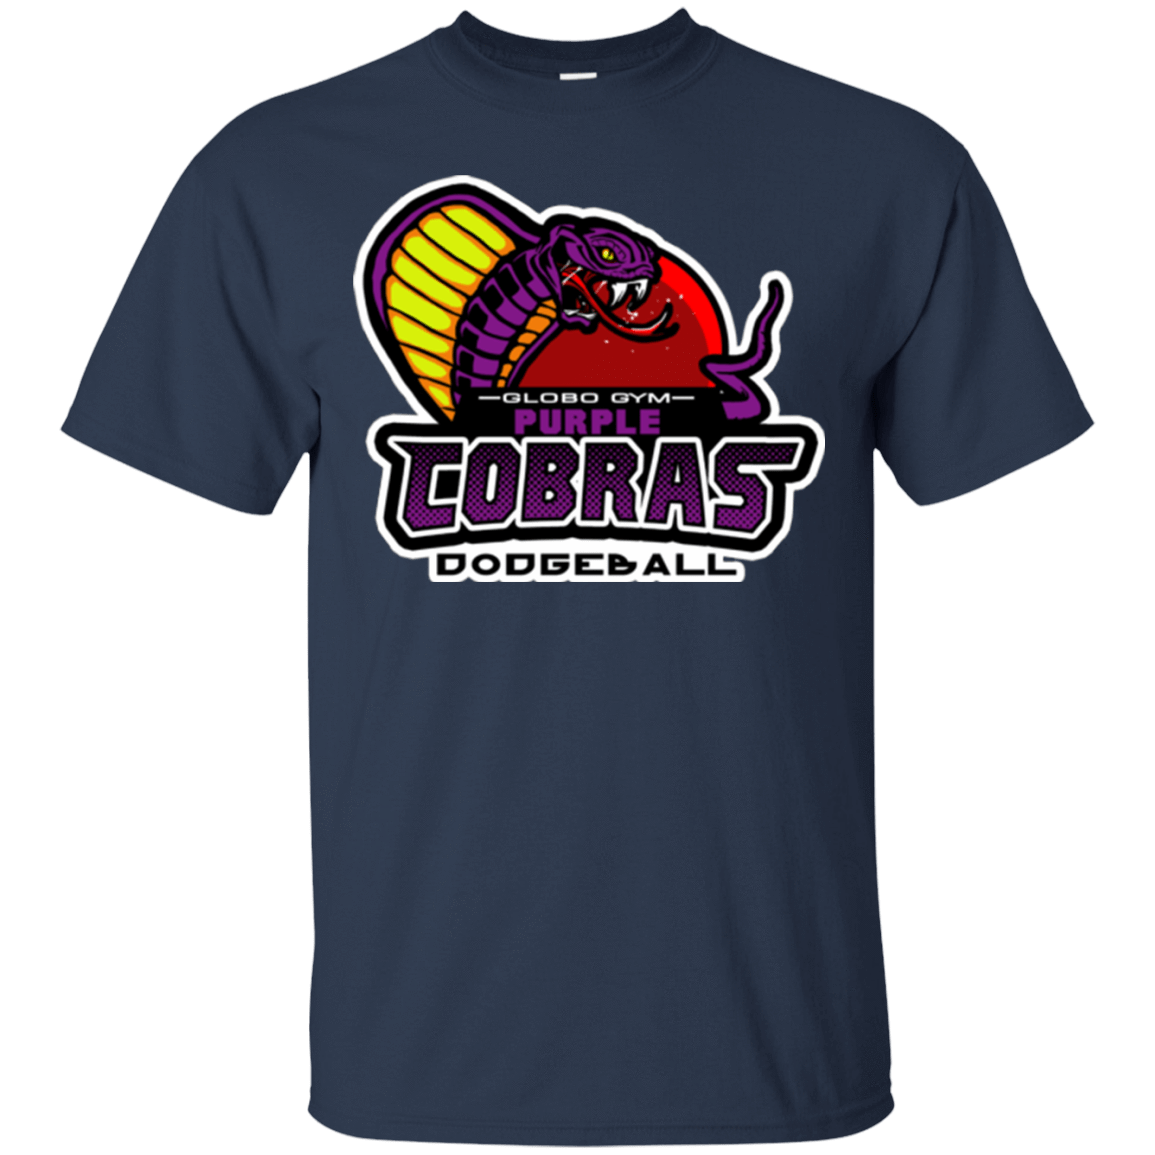 T-Shirts Navy / Small Purple Cobras T-Shirt